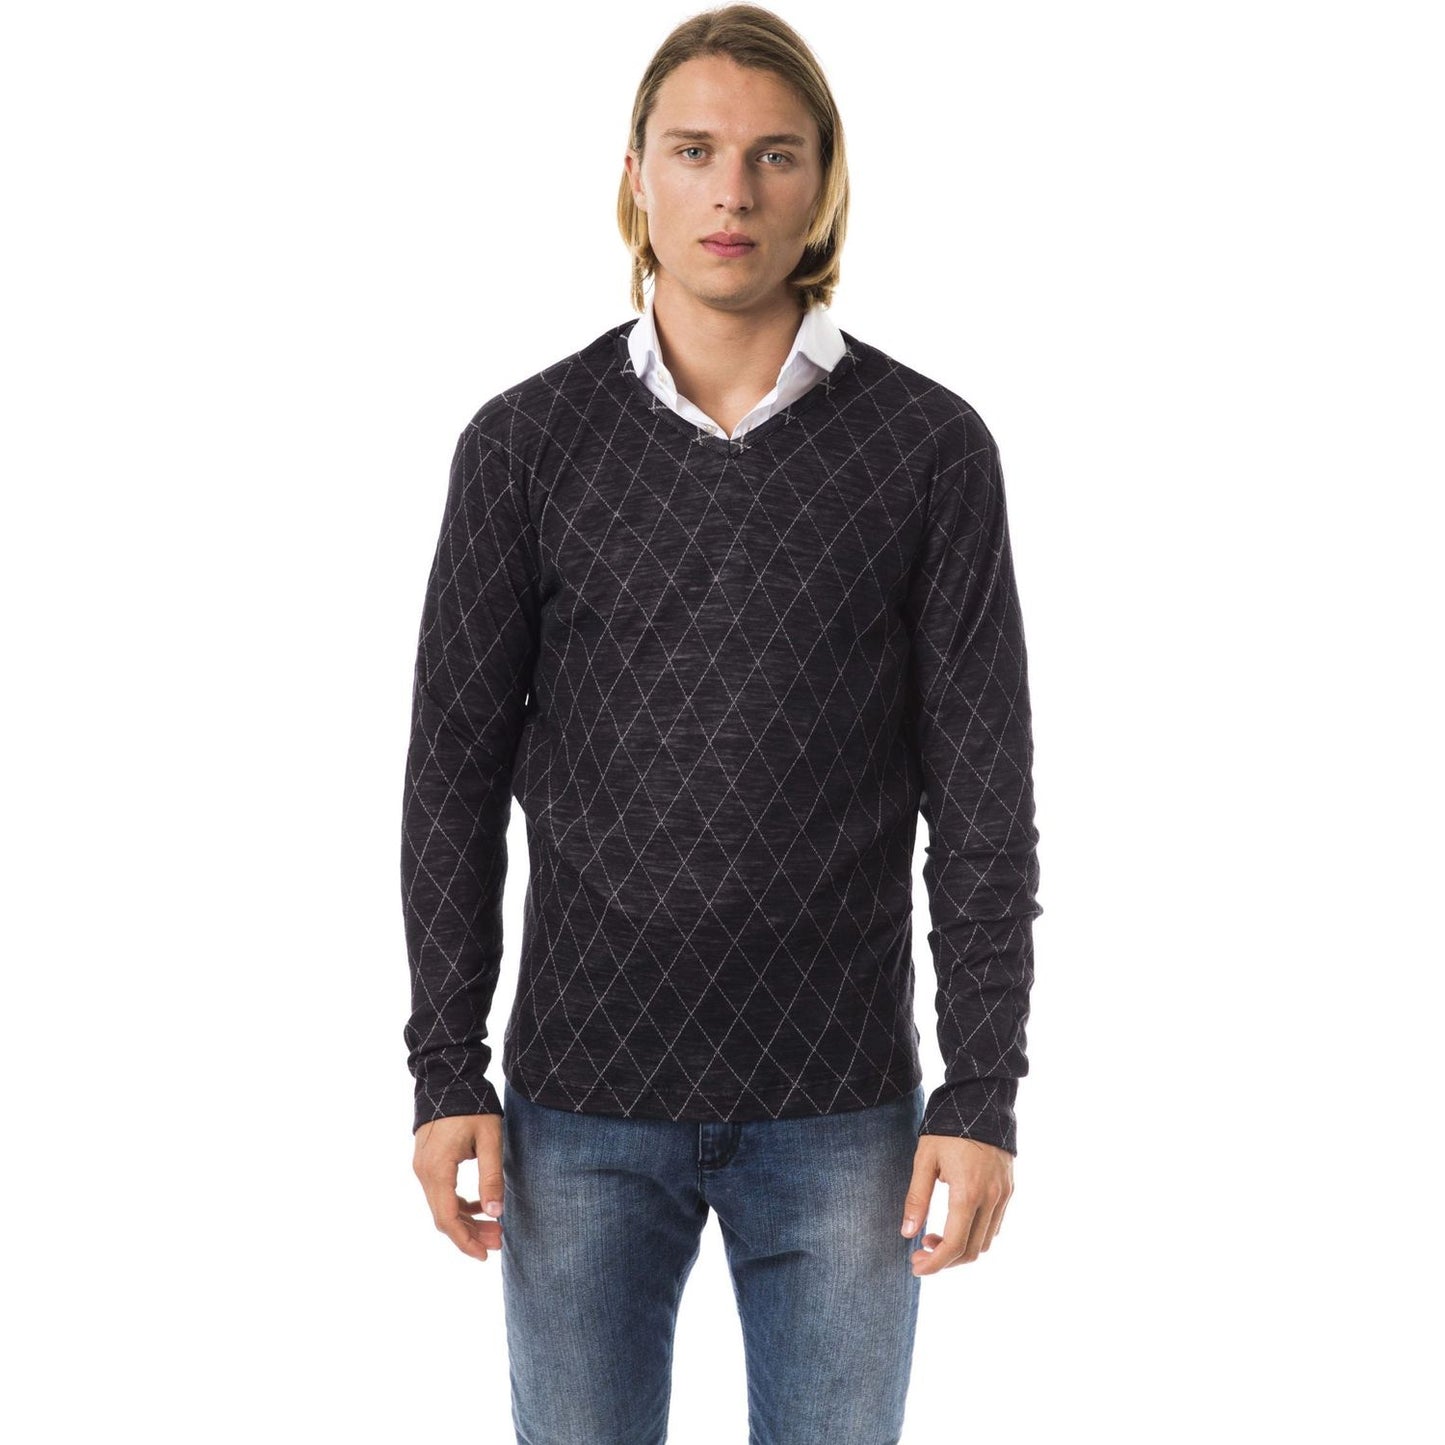 BYBLOS Elegant V-Neck Patterned Sweater black-cotton-sweater stock_product_image_17733_753324747-45-scaled-9654d00d-050.jpg